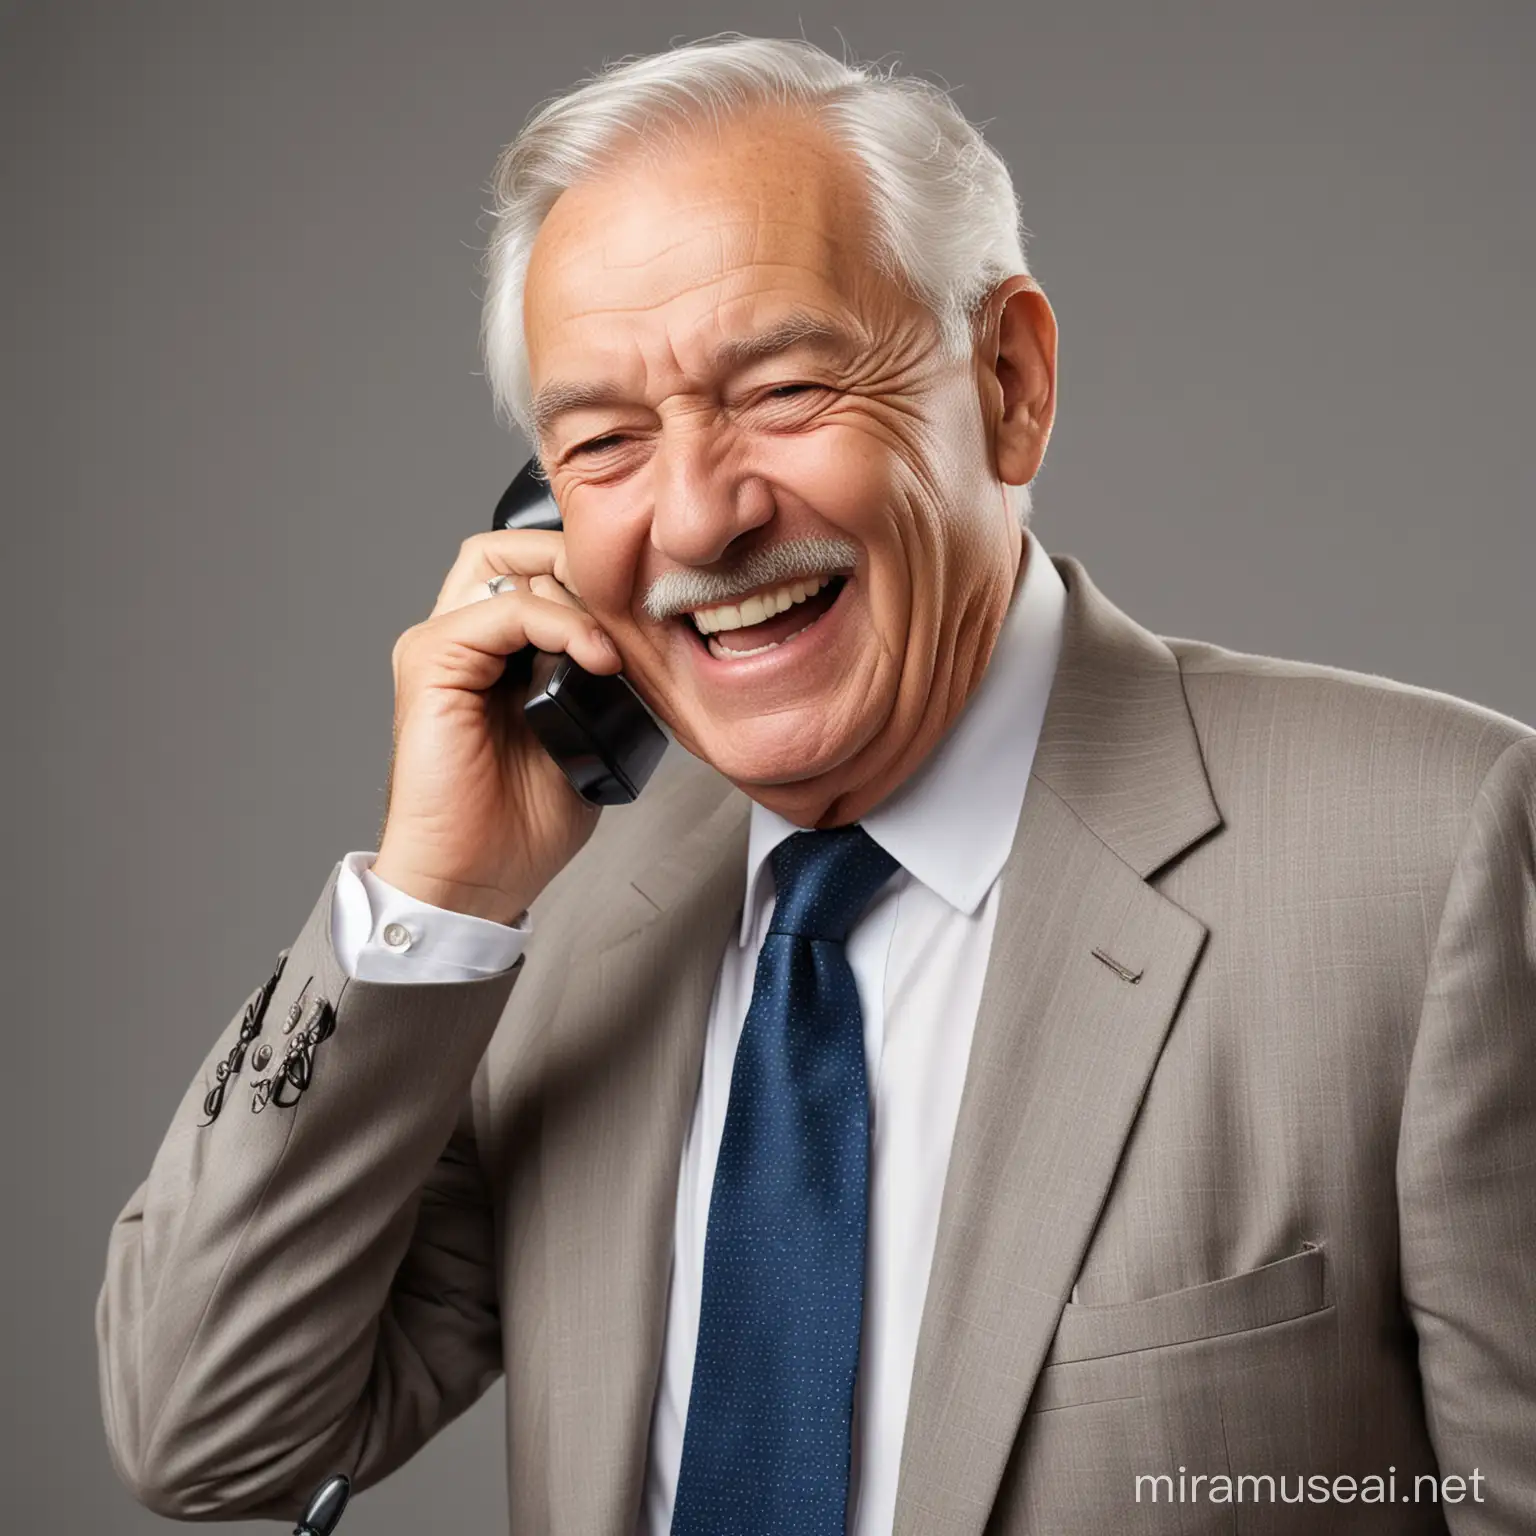 Joyful Elderly Businessman Laughing on Phone Call